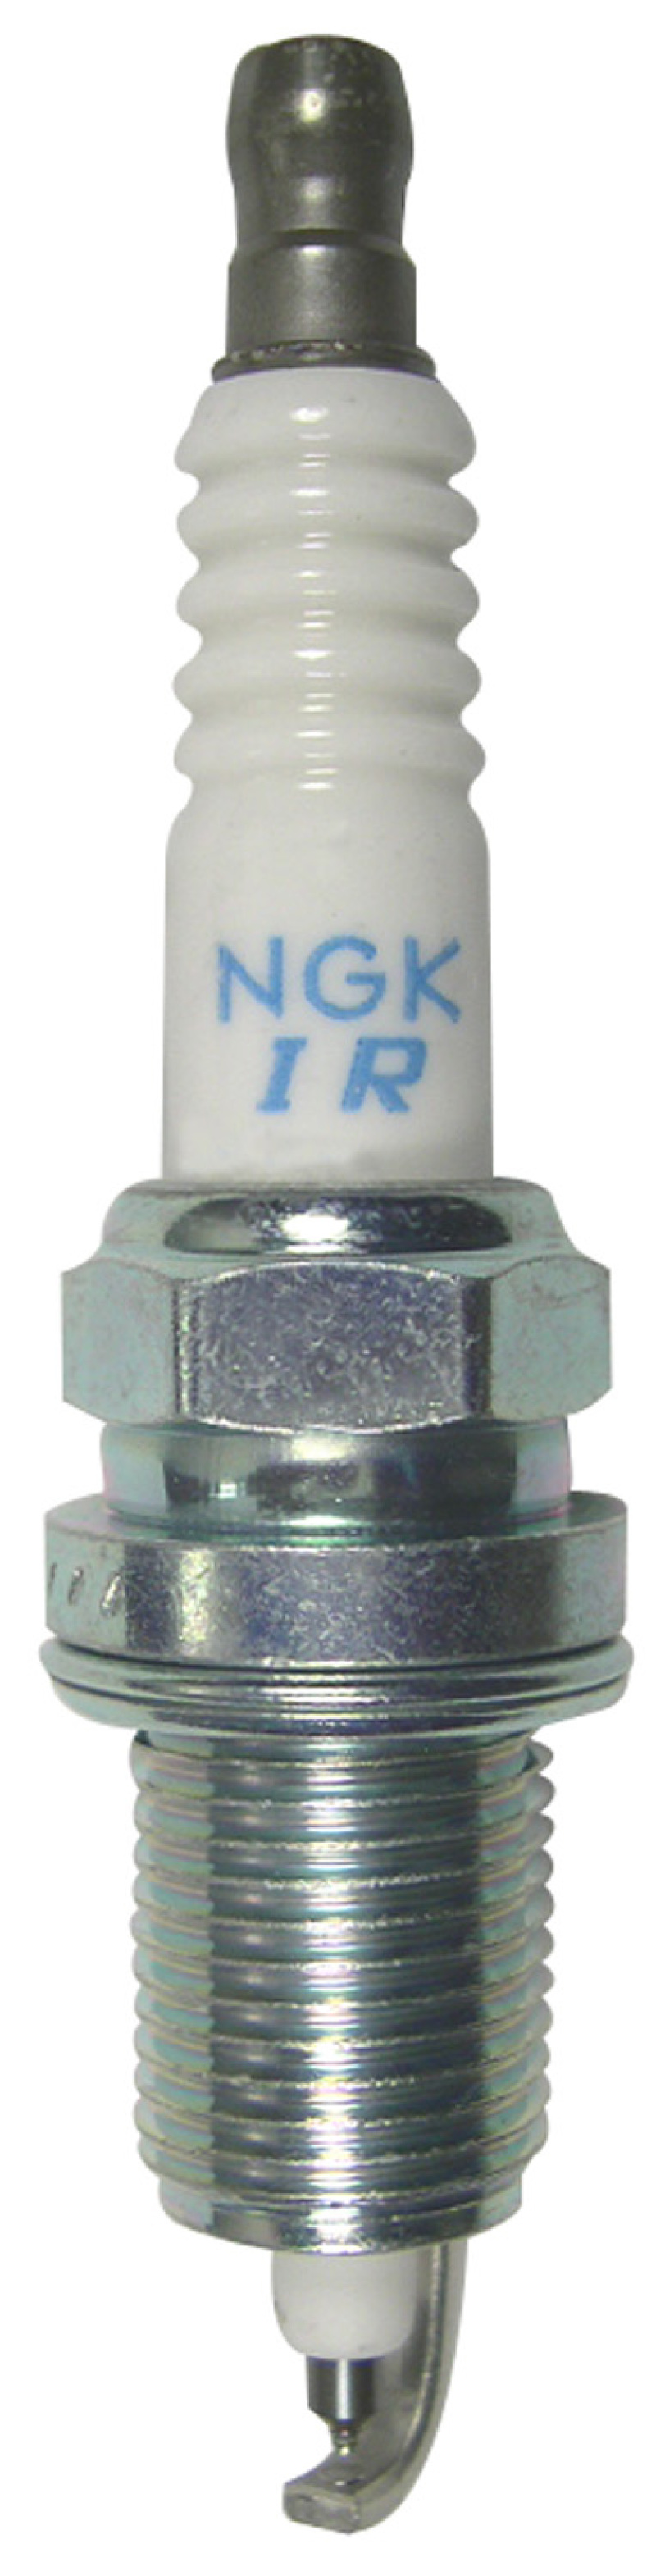 NGK Laser Iridium Spark Plug Box of 4 (IZFR6Q) - 91234